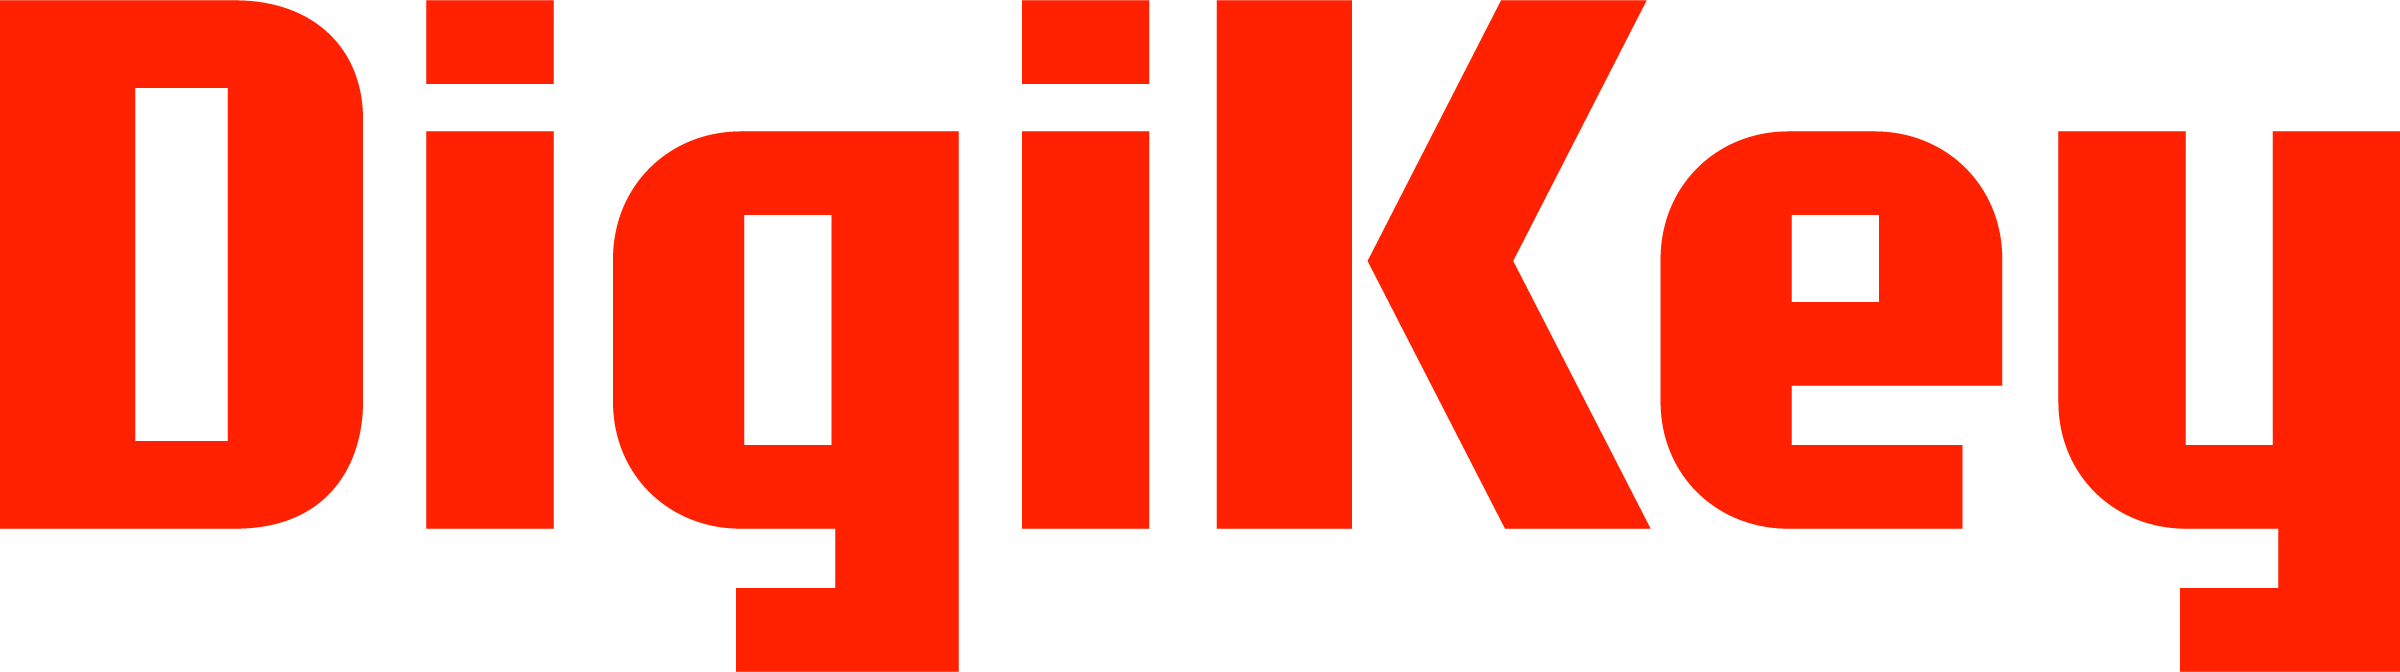 DigiKey 公布标志和品牌更新 品牌更新反映了公司的发展和商业领导地位